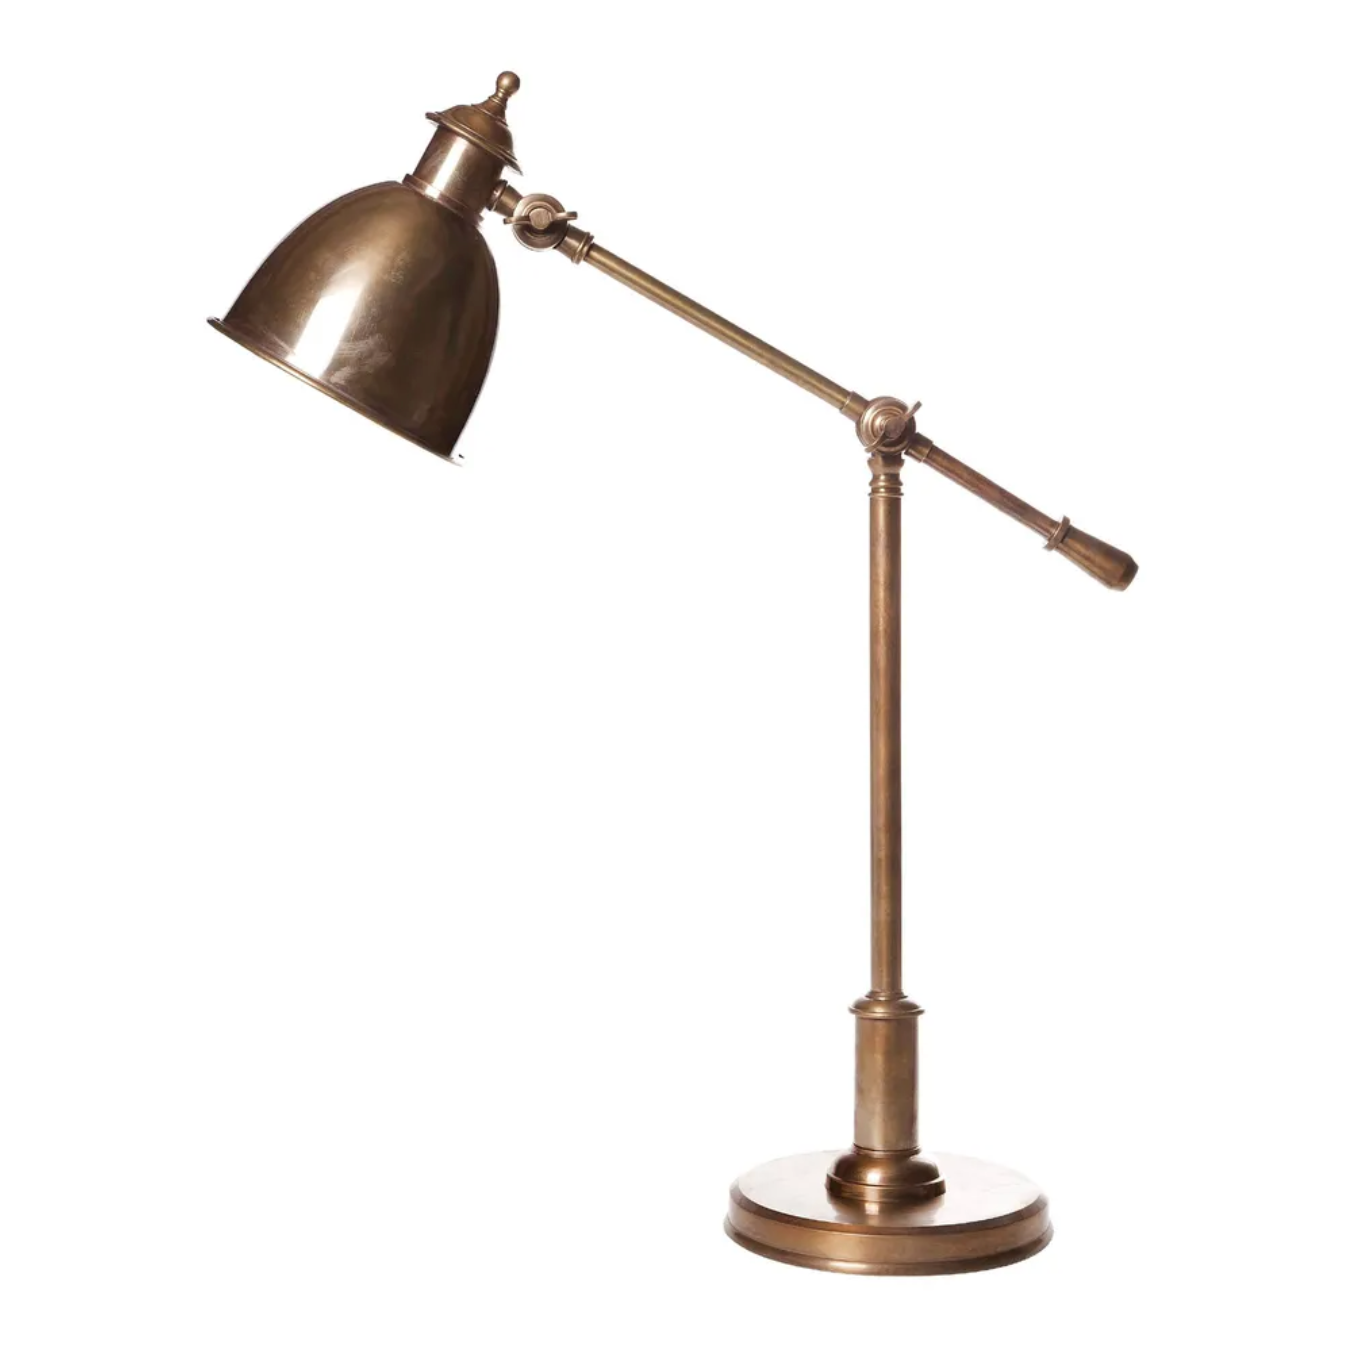 Vermont Desk Lamp Antique Brass